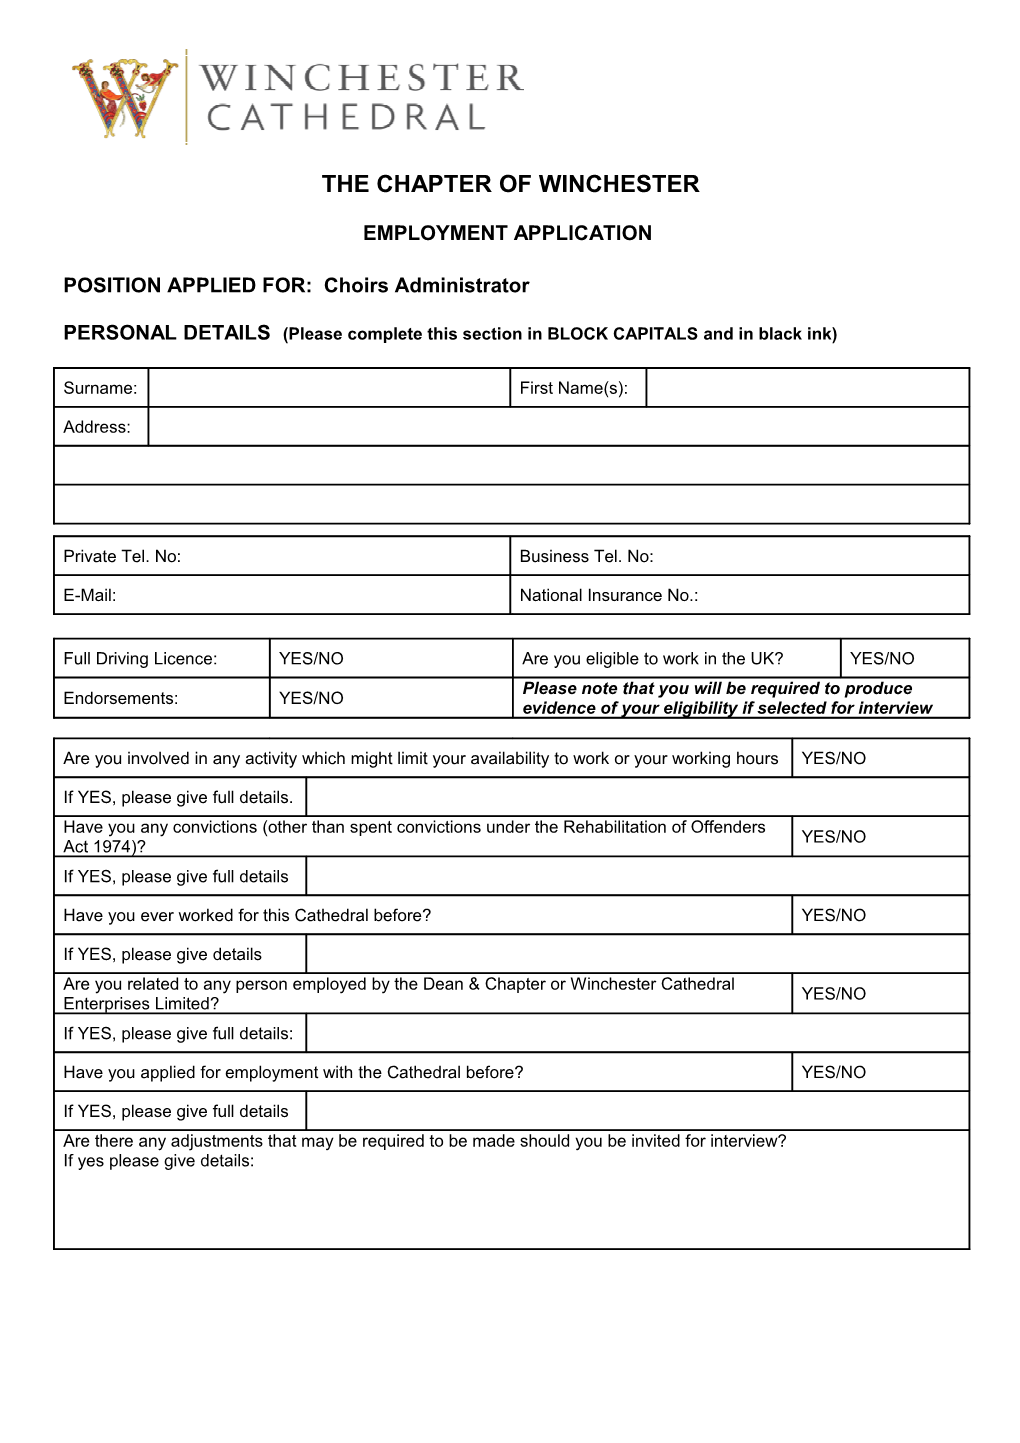 Employment Application Form s14